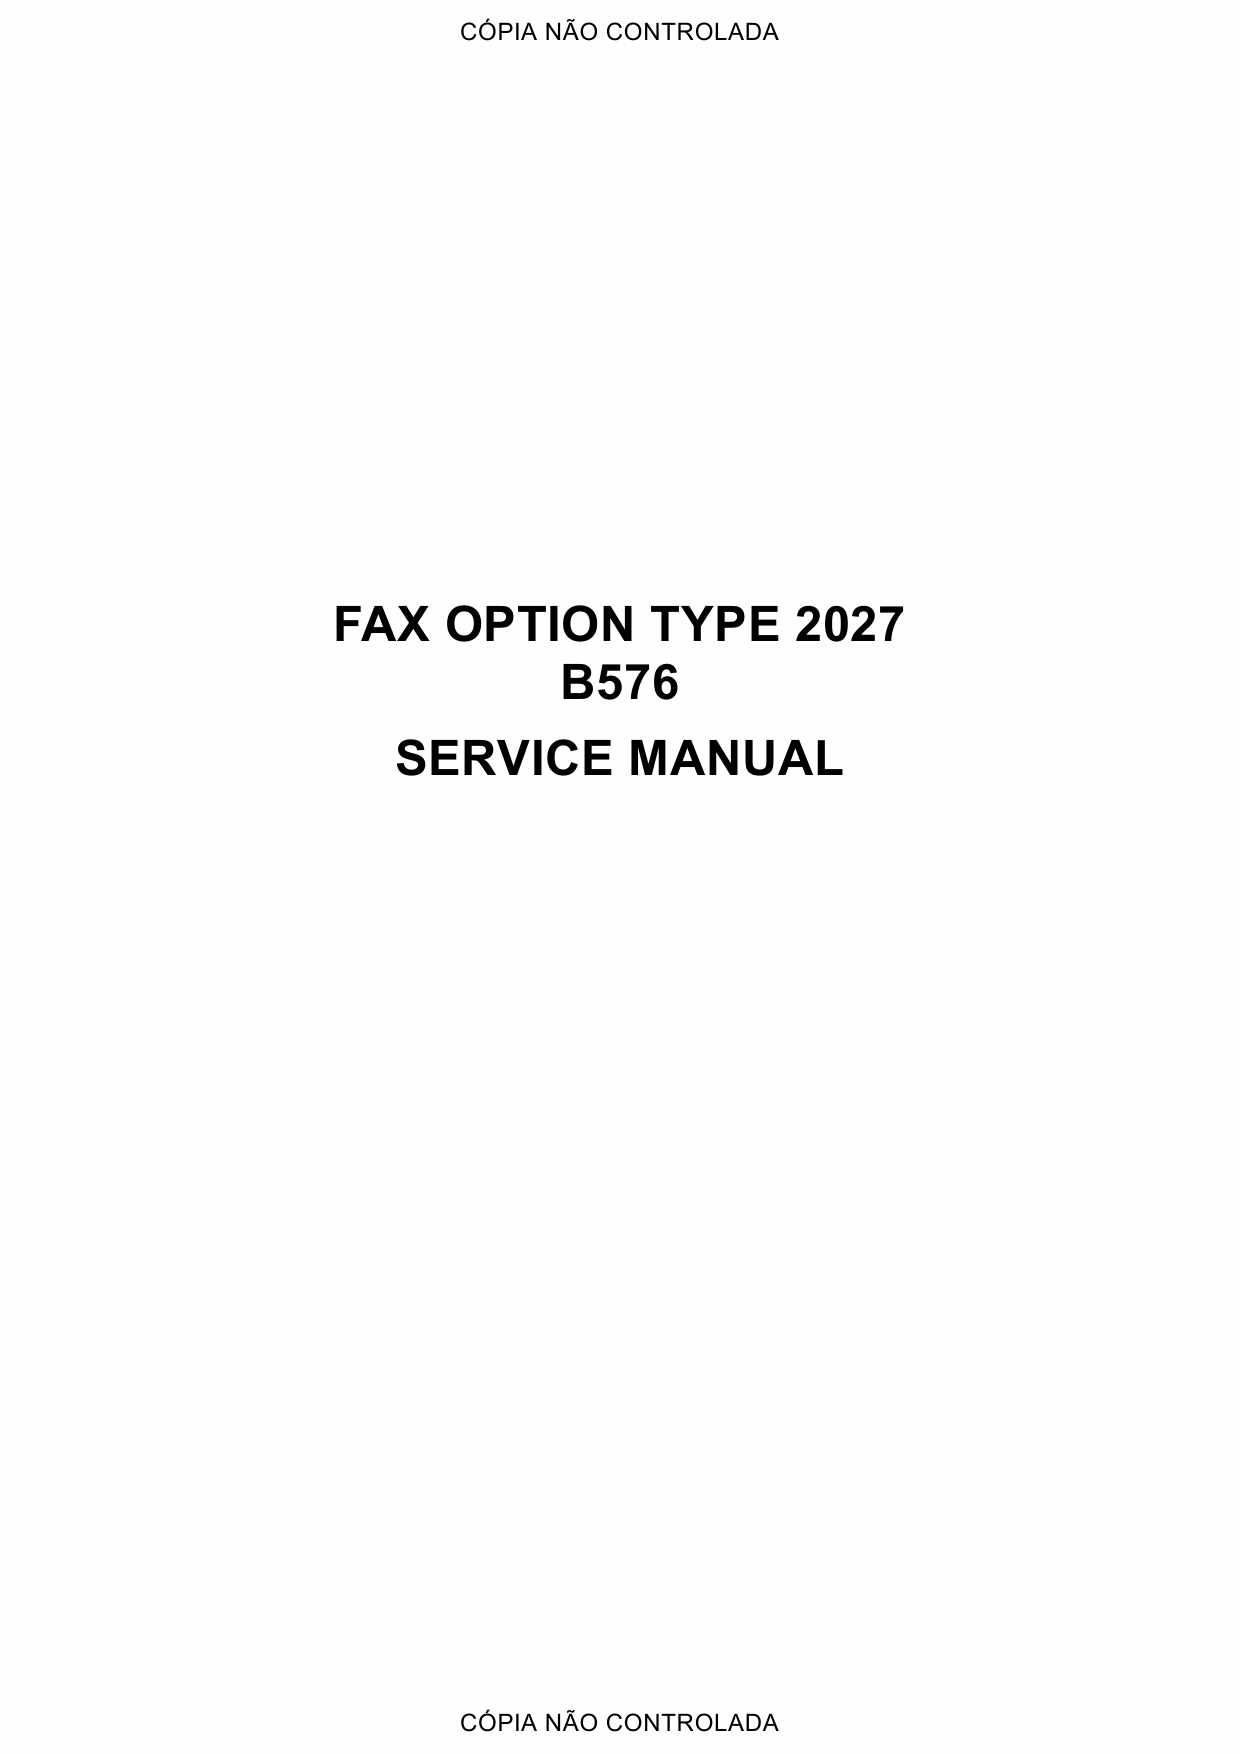 RICOH Options B576 FAX-OPTION-TYPE-2027 Service Manual PDF download-1